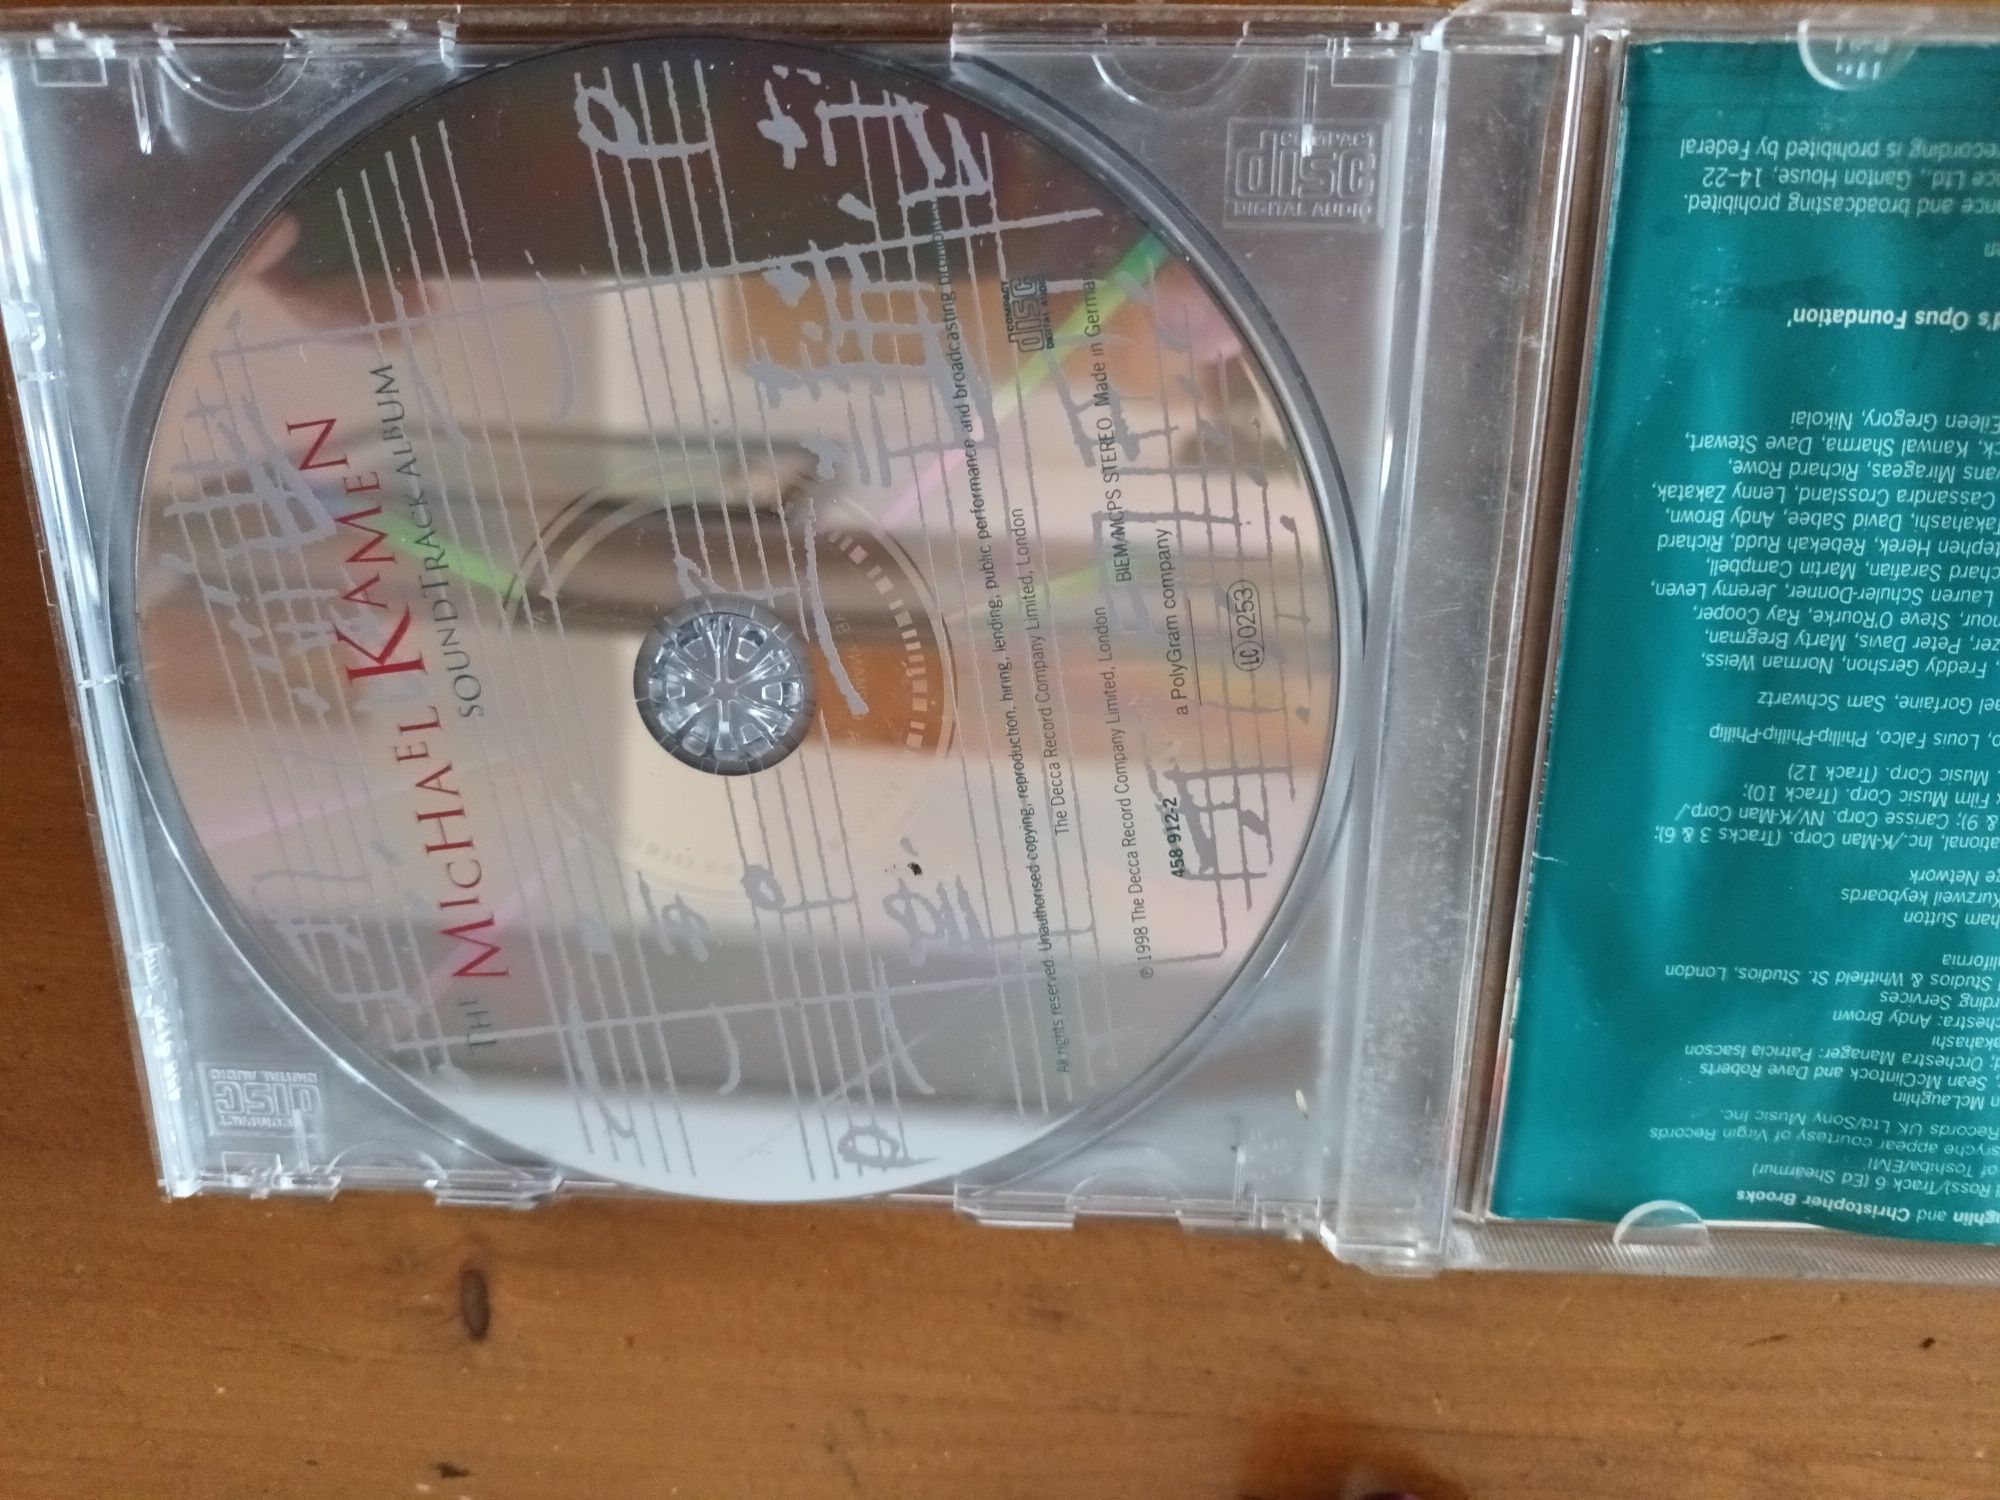 Michael Kamen soundtrack  cd